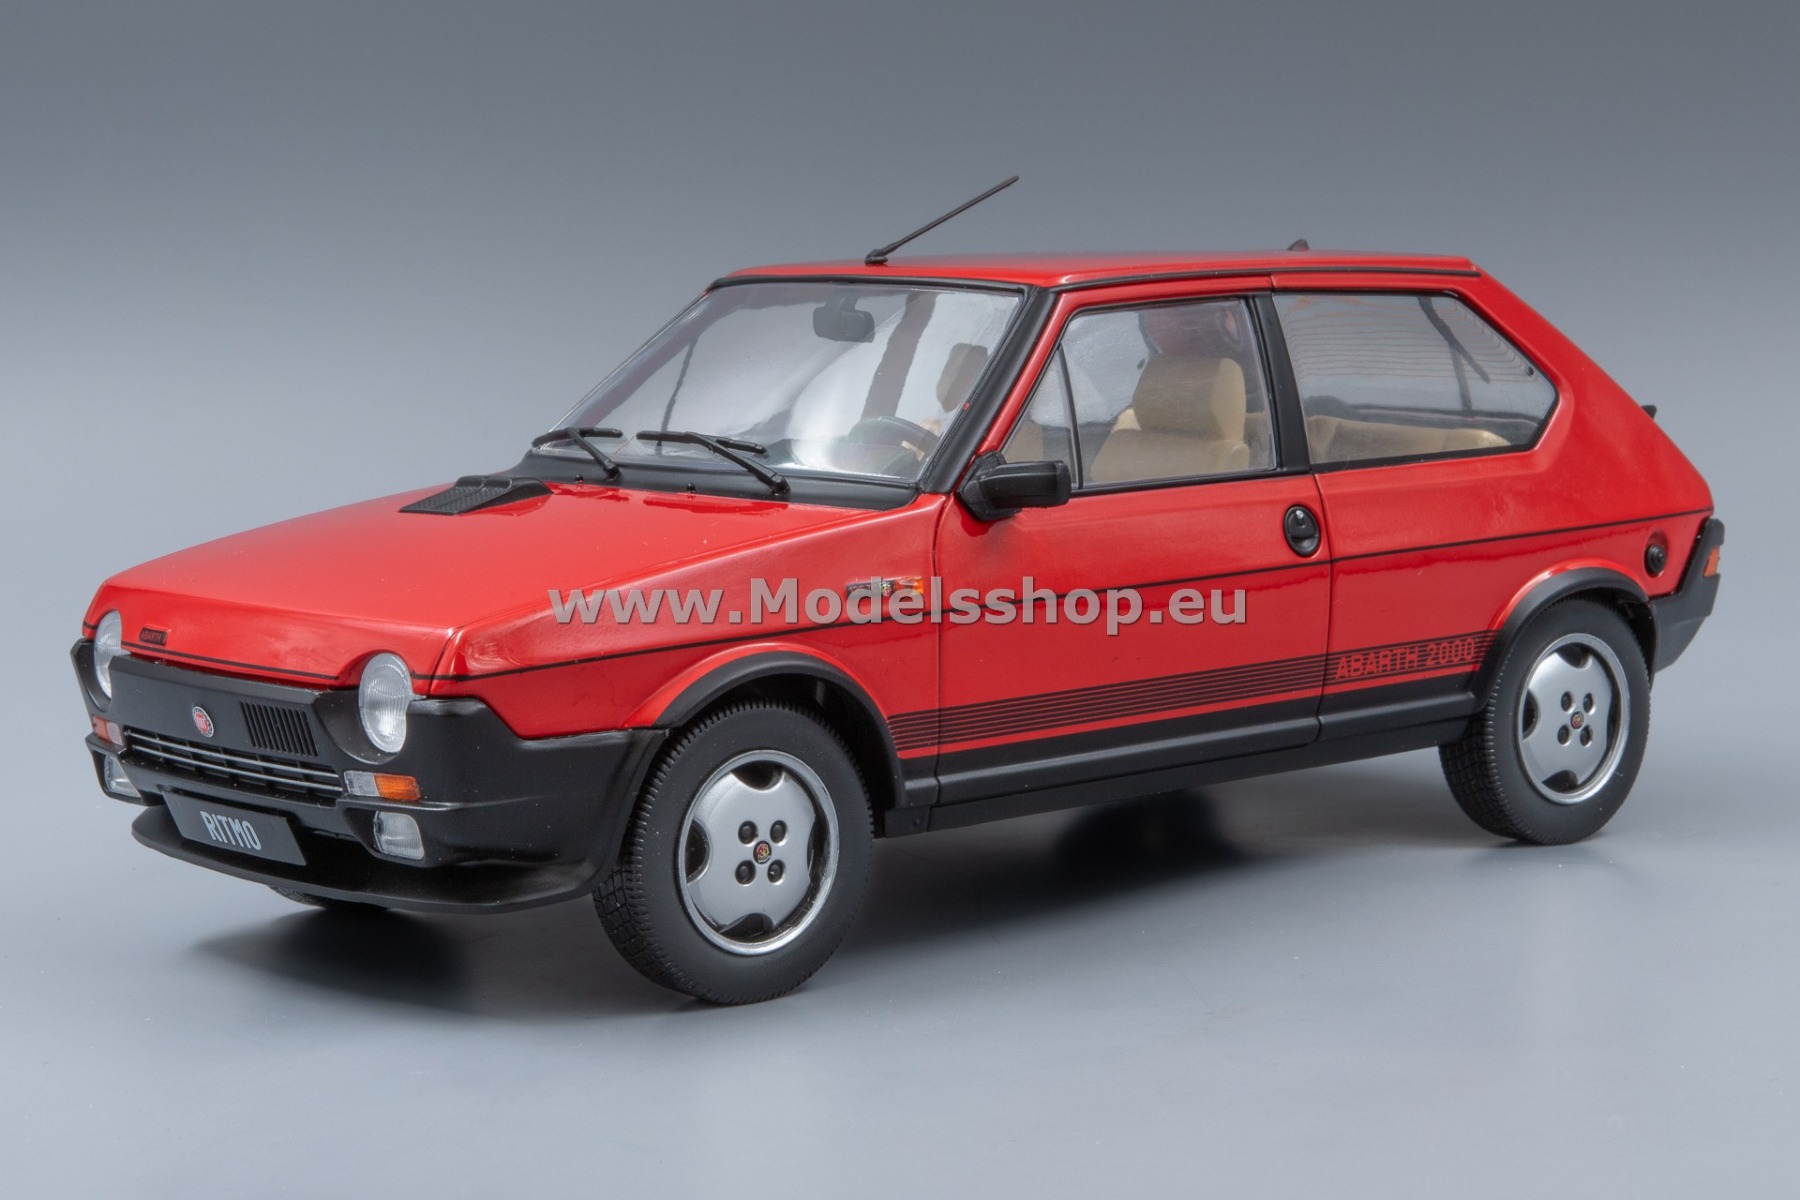 MCG 18416 Fiat Ritmo TC 125 Abarth, 1980 /red/